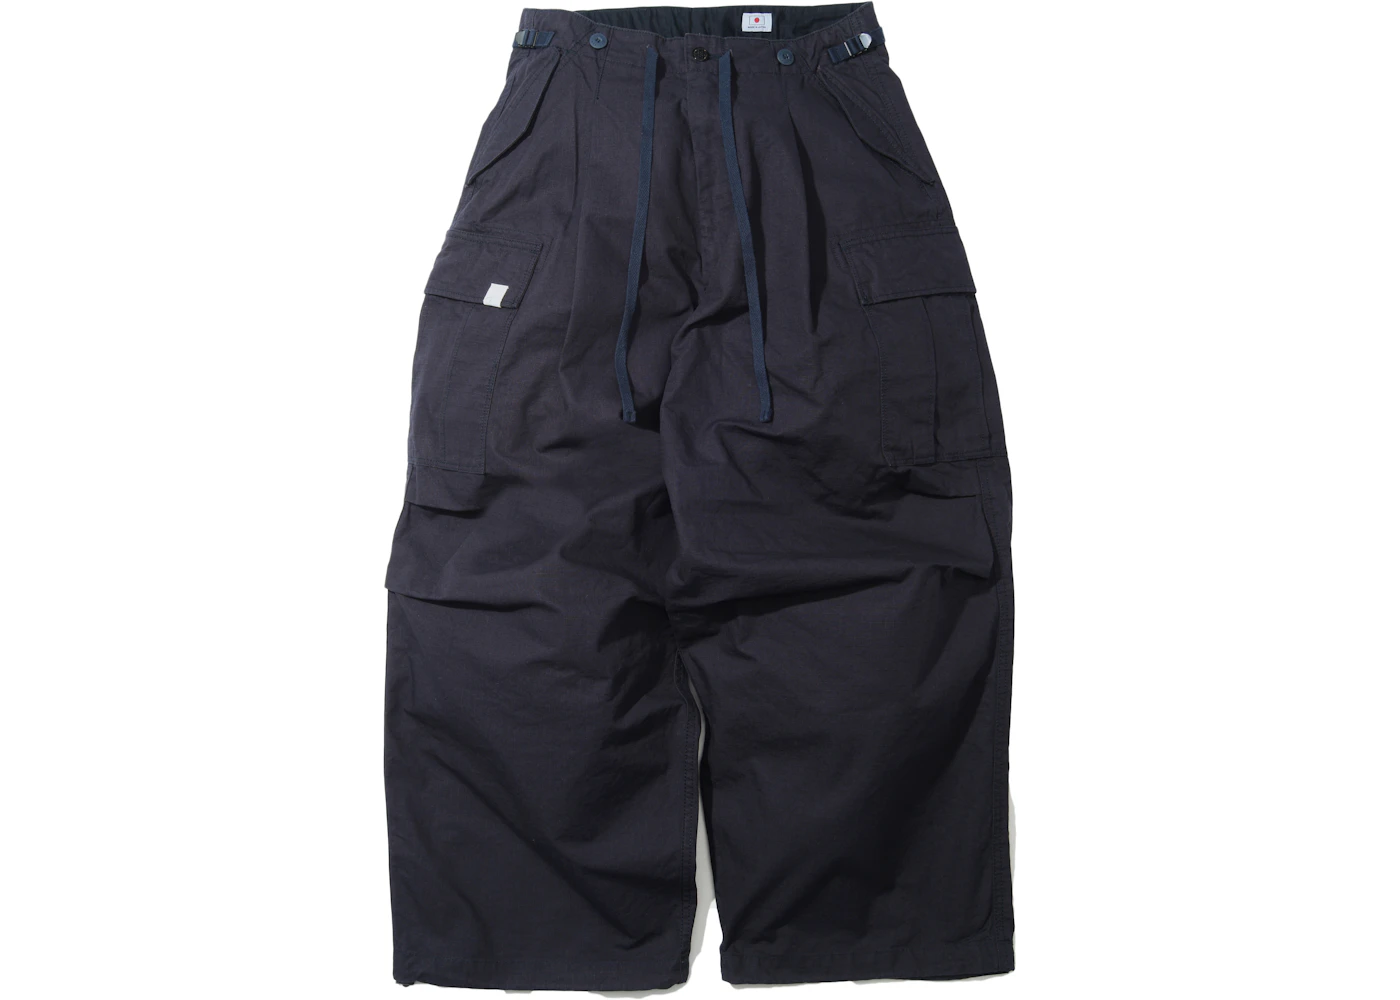 LAKH Plus Huge Pockets Cargo Pants Navy Men's - SS21 - US